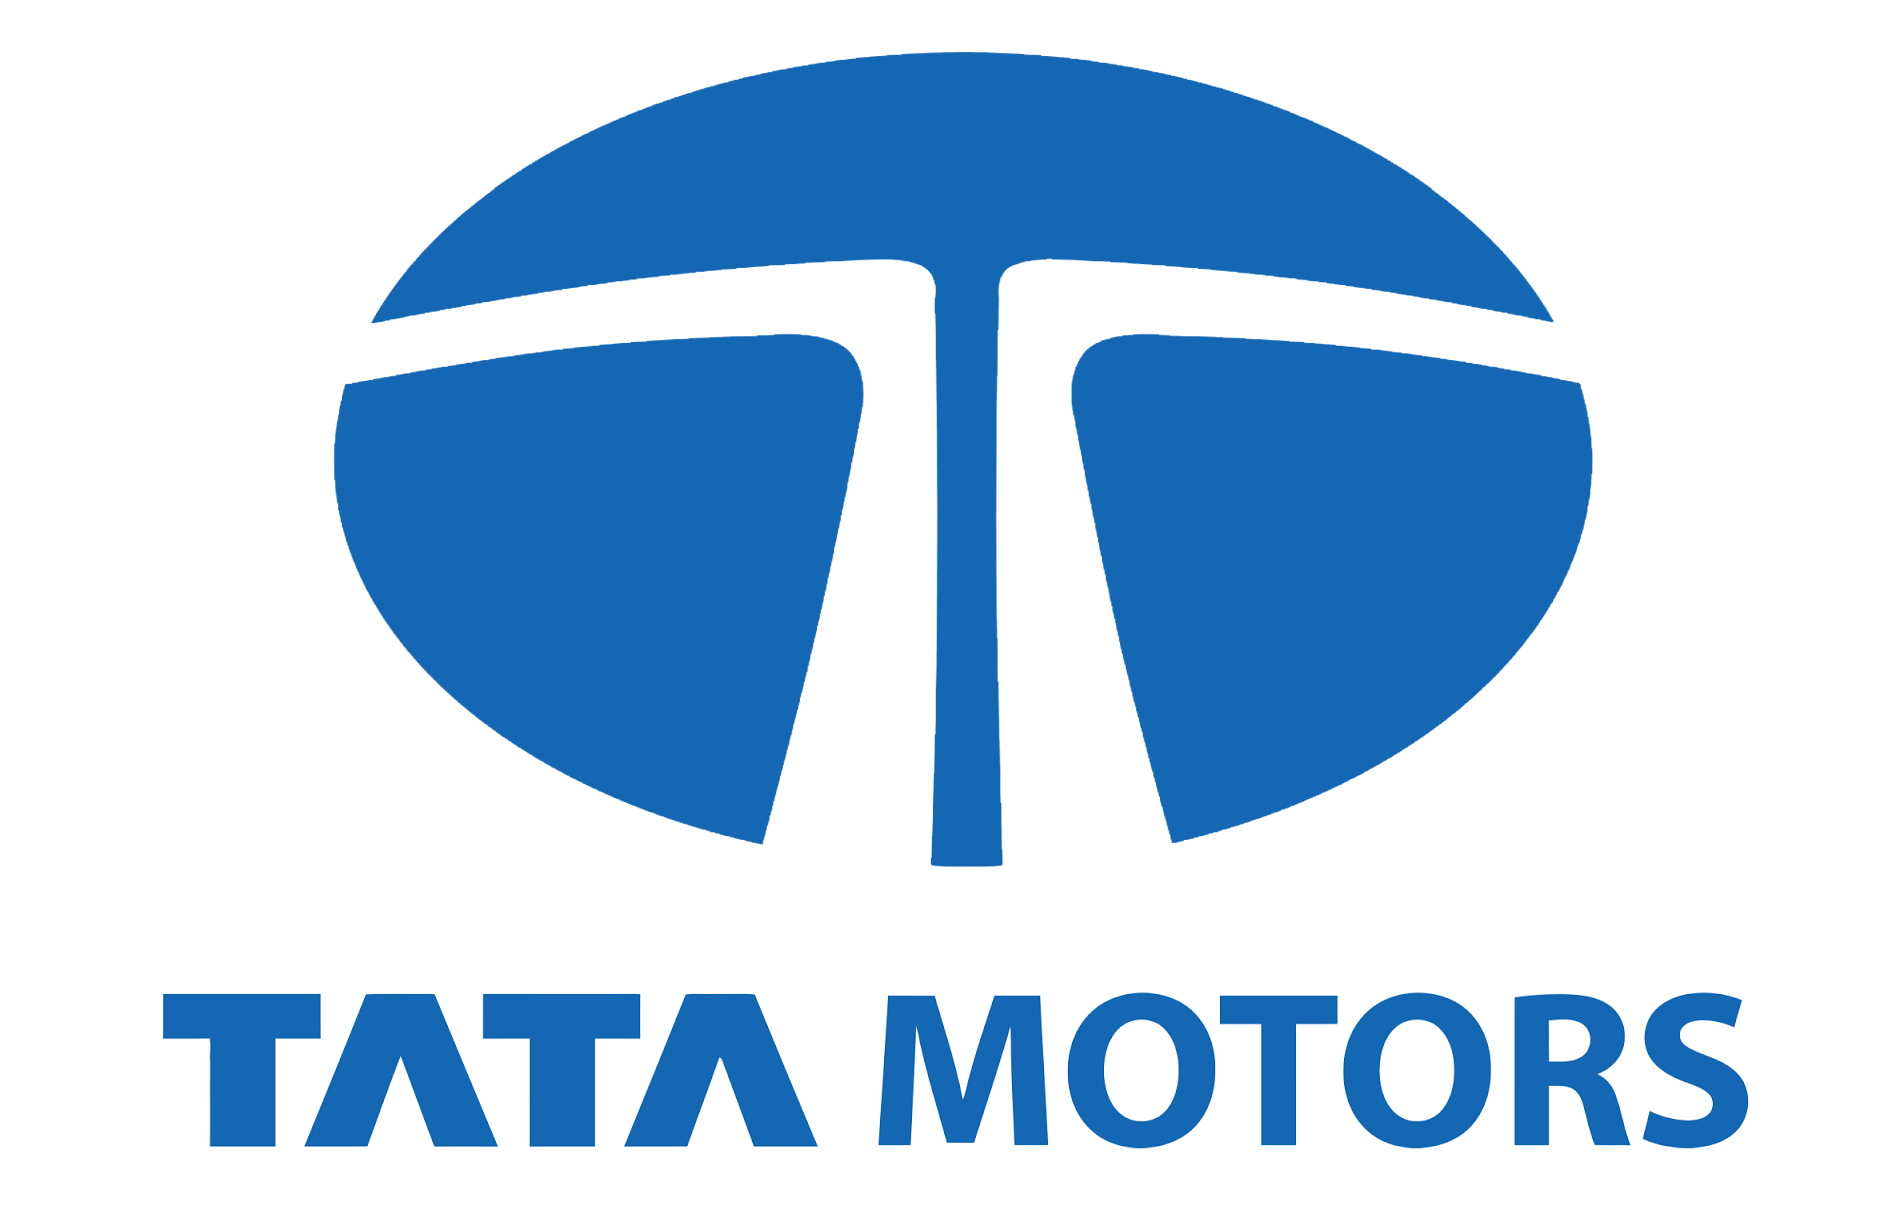 Tata Motors Cars Showroom - Jaika Motors - Logo